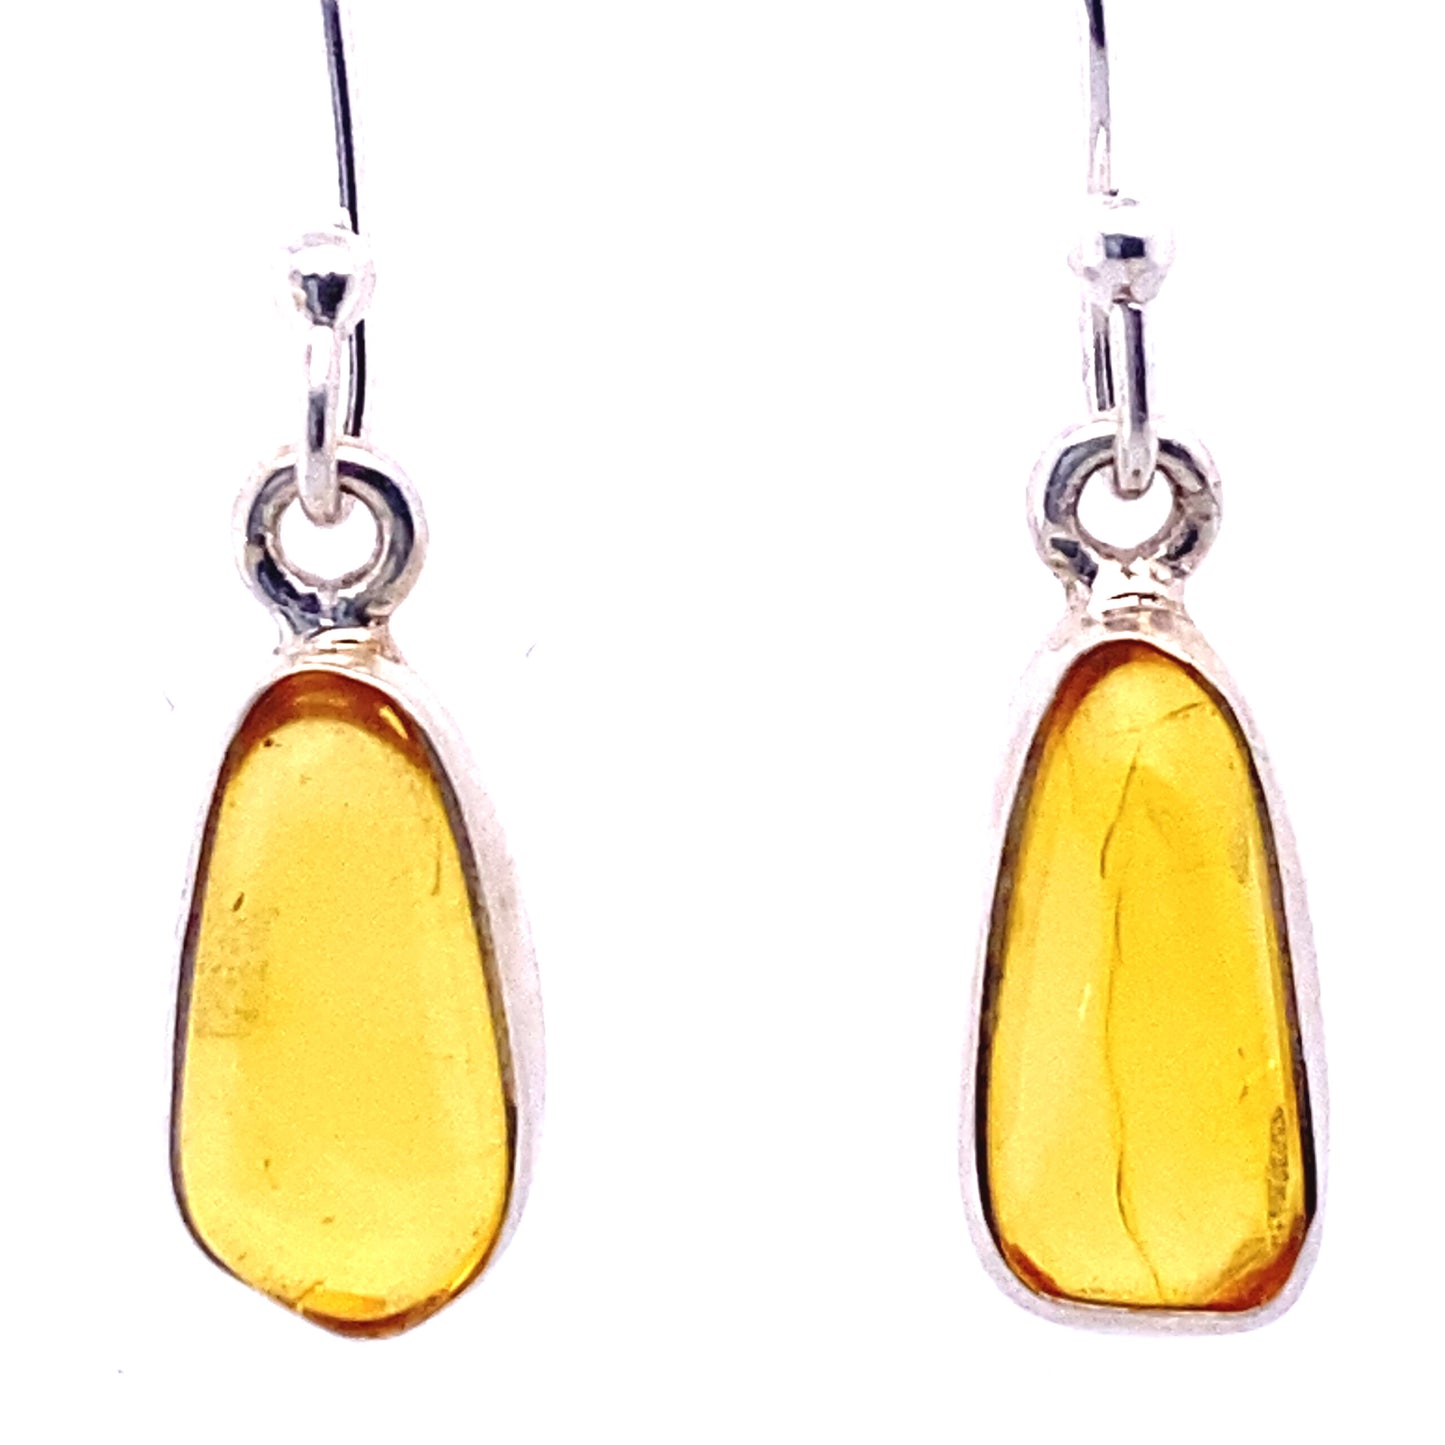 Amber Nectar Droplet Earrings